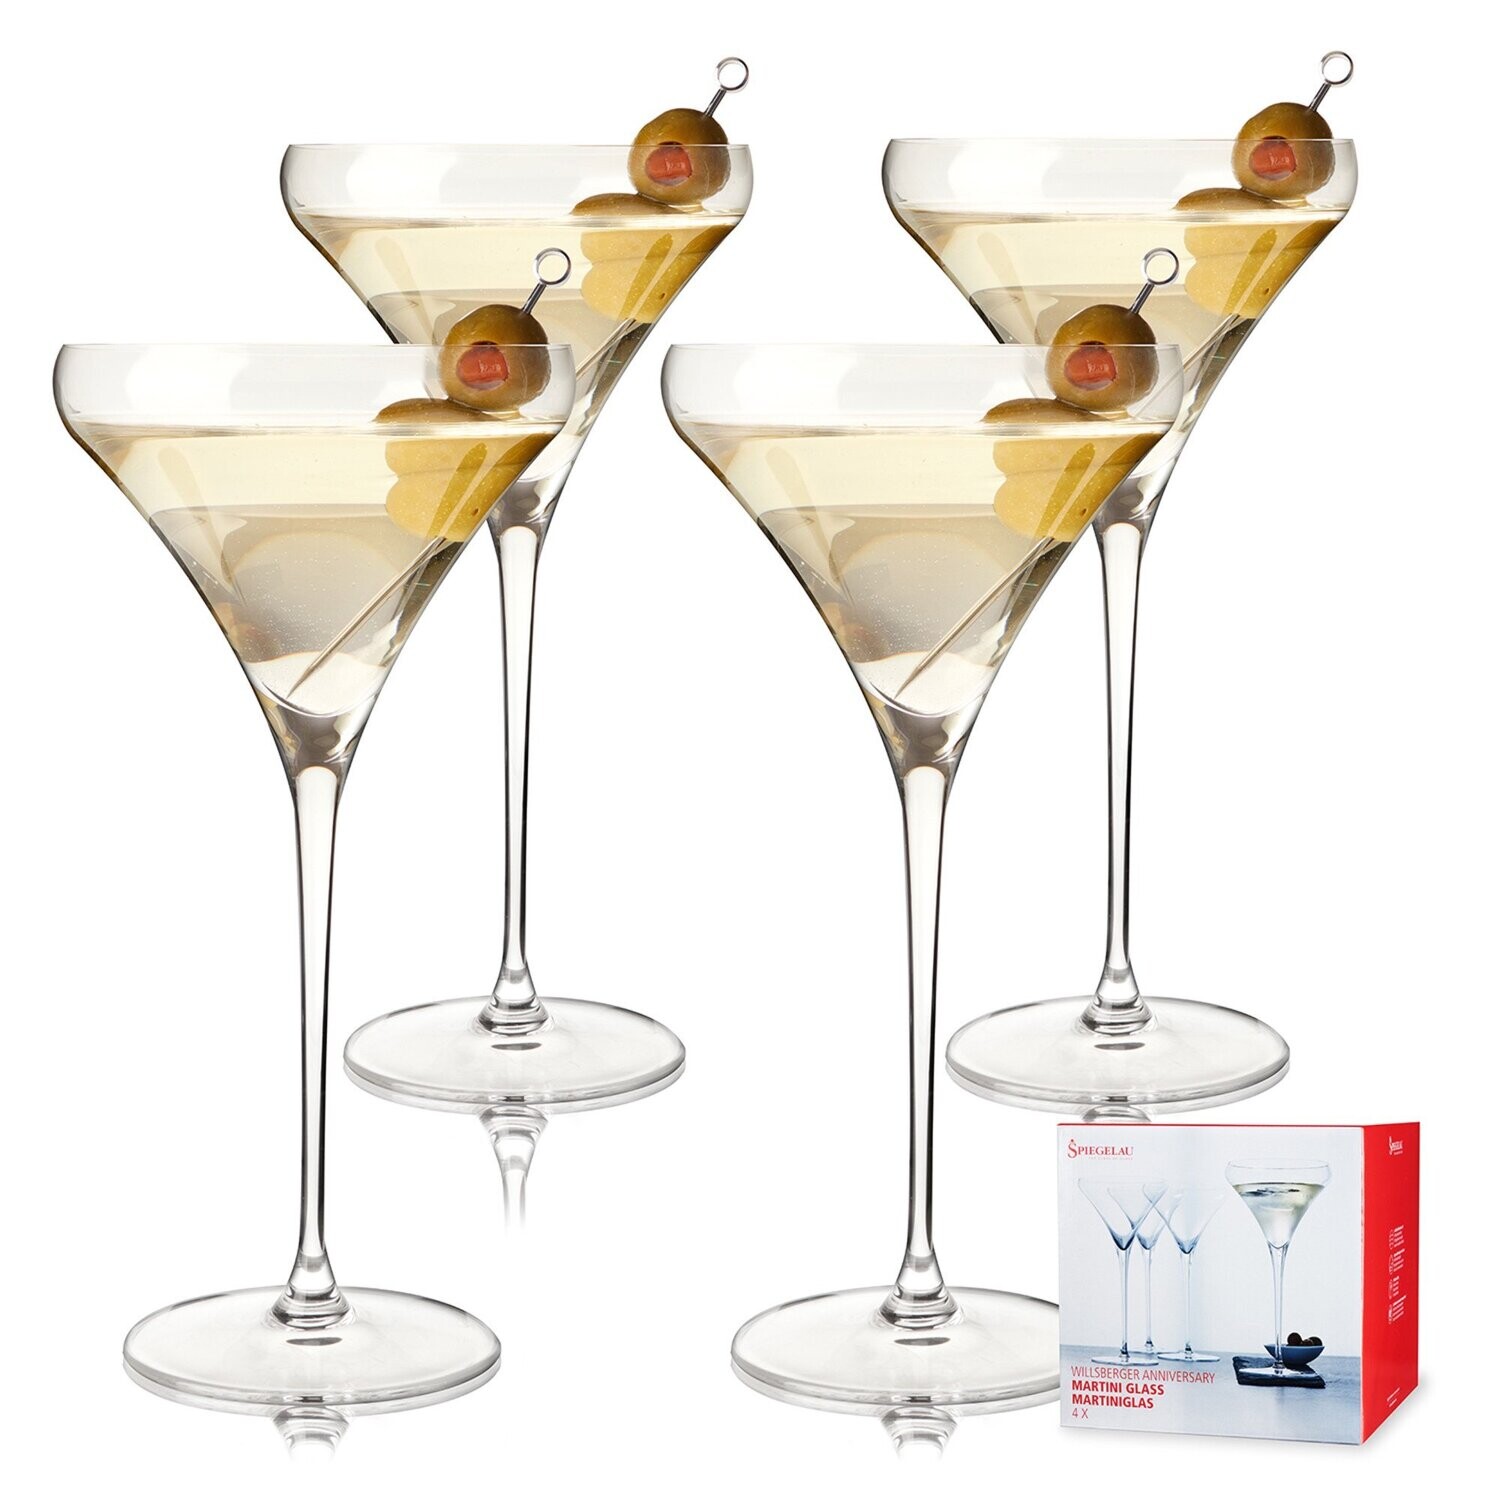 Spiegelau Willsberger Martini Glasses Set of 4 - European-Made Crystal, Modern Cocktail Glasses, Dishwasher Safe, Professional Quality Cocktail Glass Gift